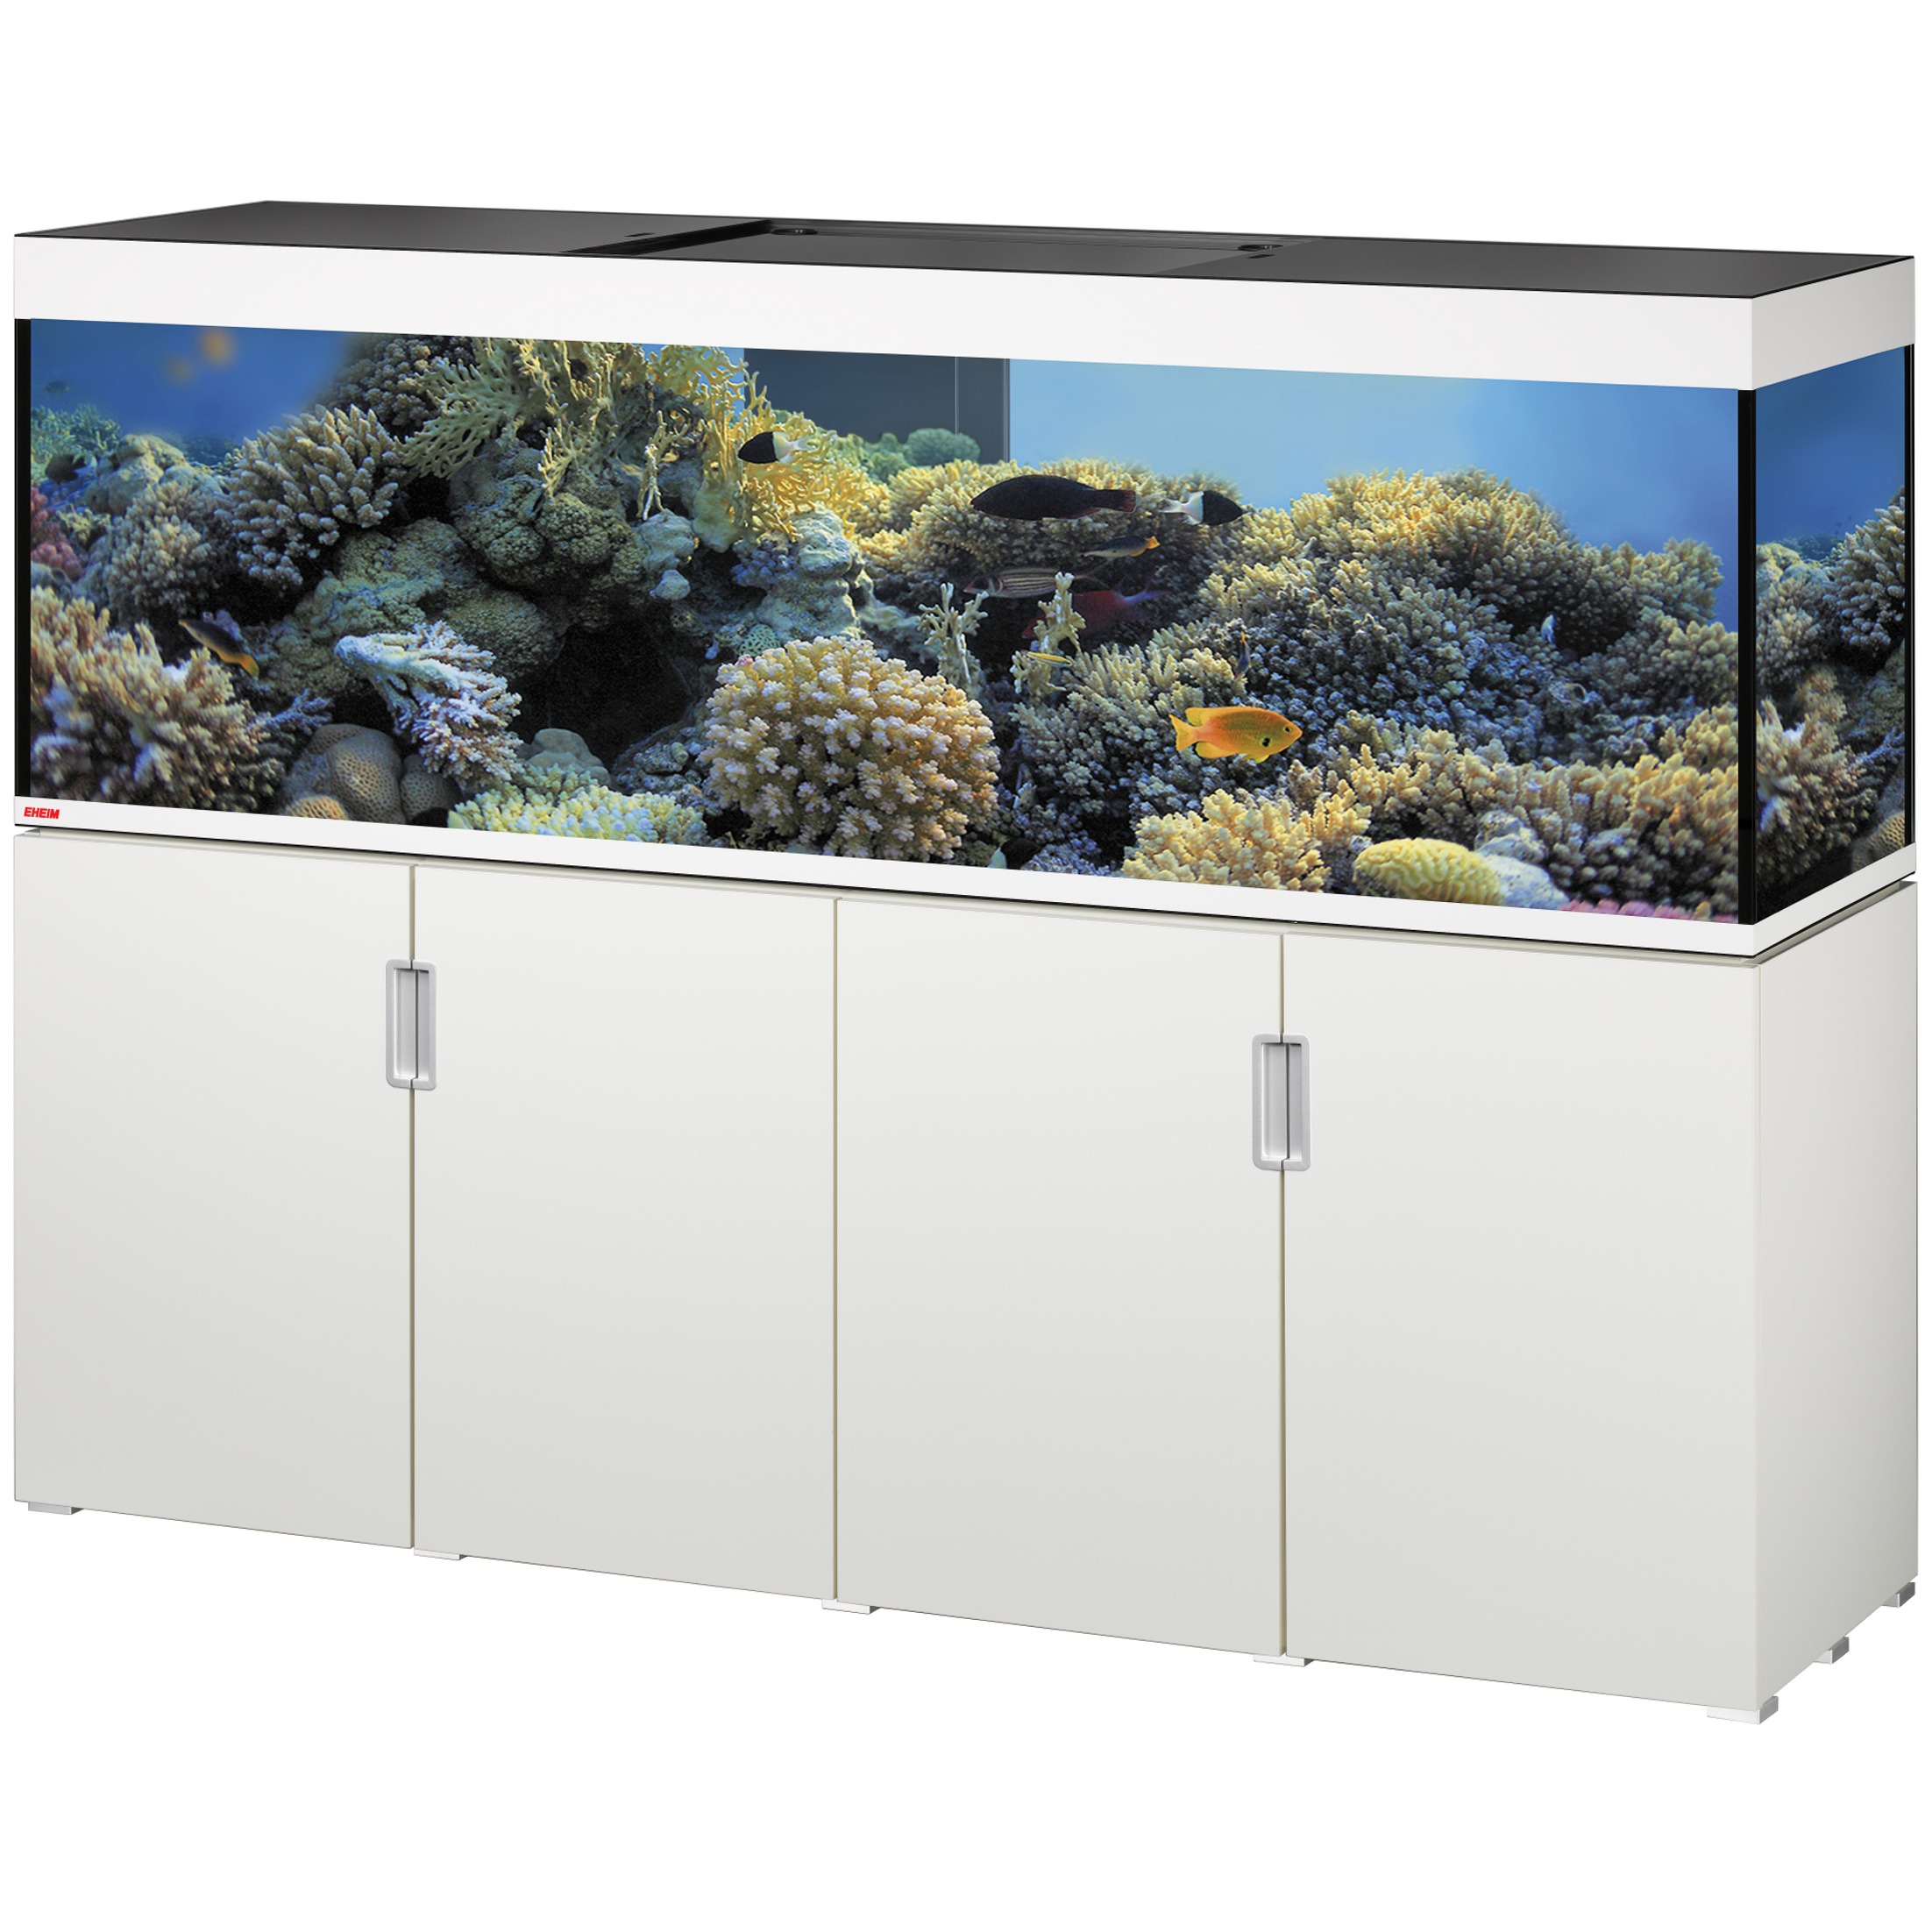 eheim-incpiria-marine-600-led-blanc-brillant-kit-aquarium-200-cm-600-l-avec-meuble-et-eclairage-leds-min